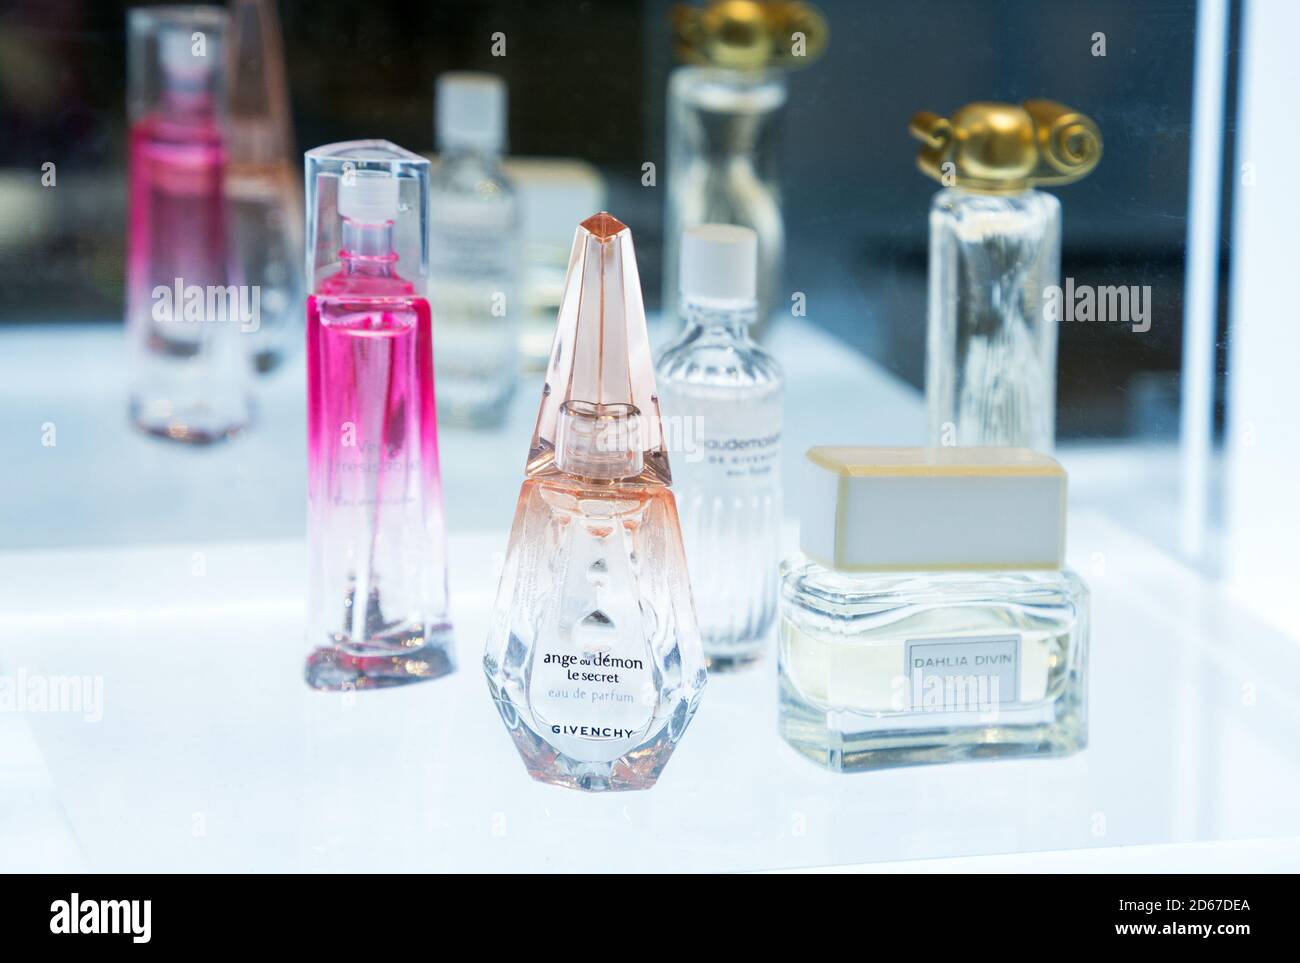 givenchy perfume bottles